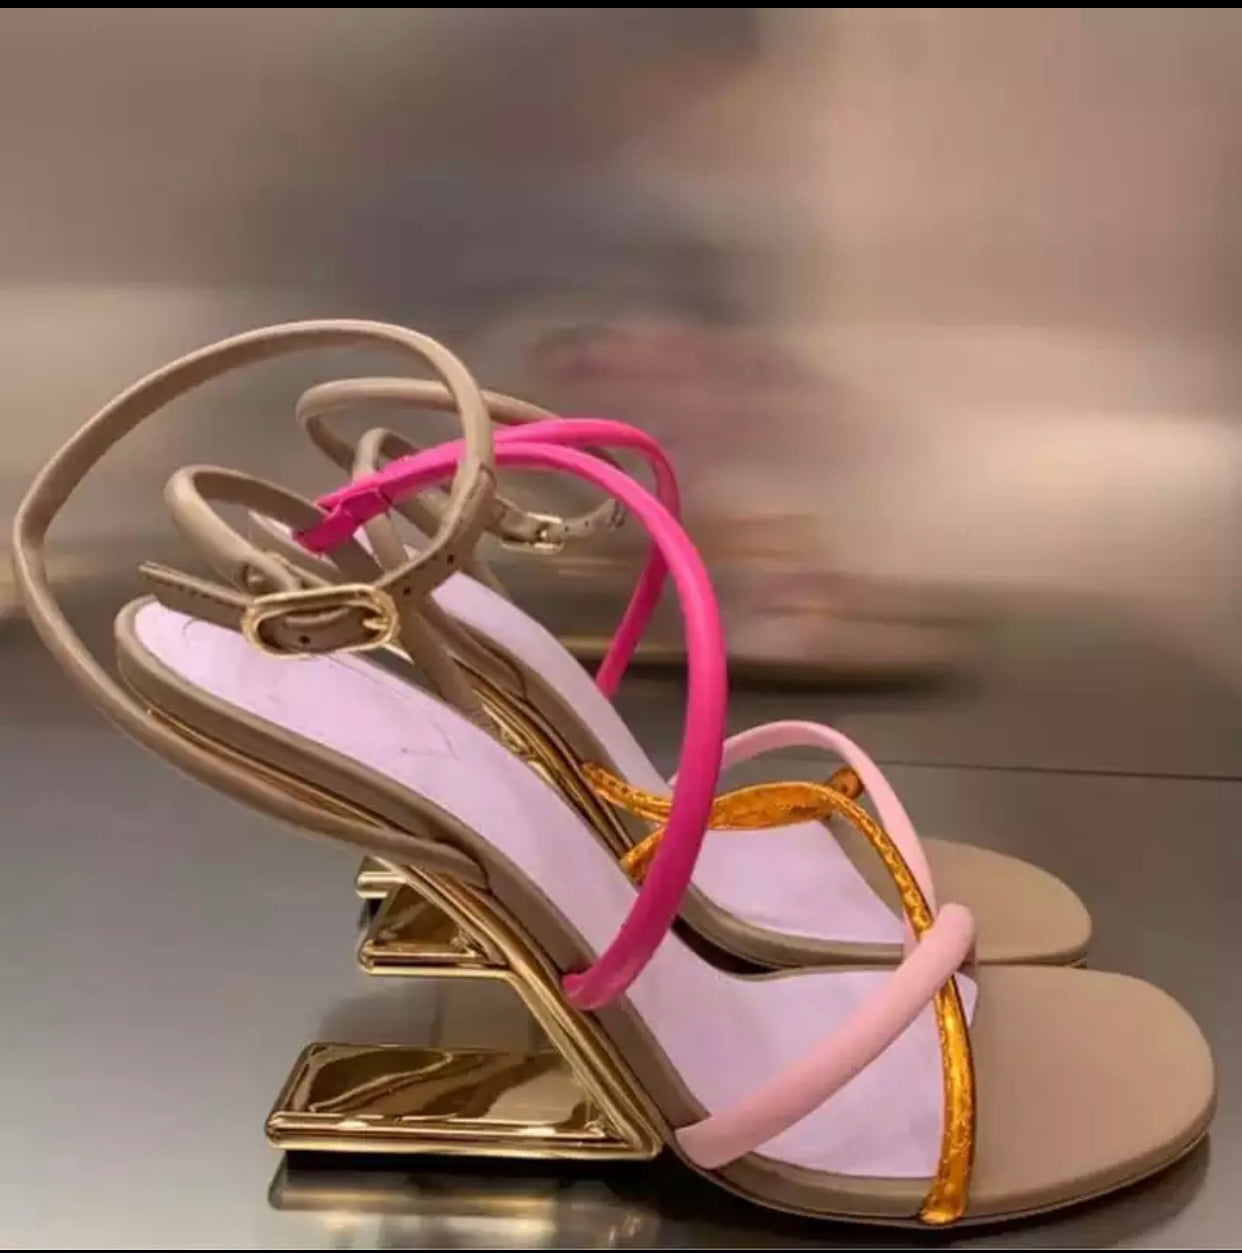 The “ One In A Million” High Heel Sandals - Seasonal Secrets